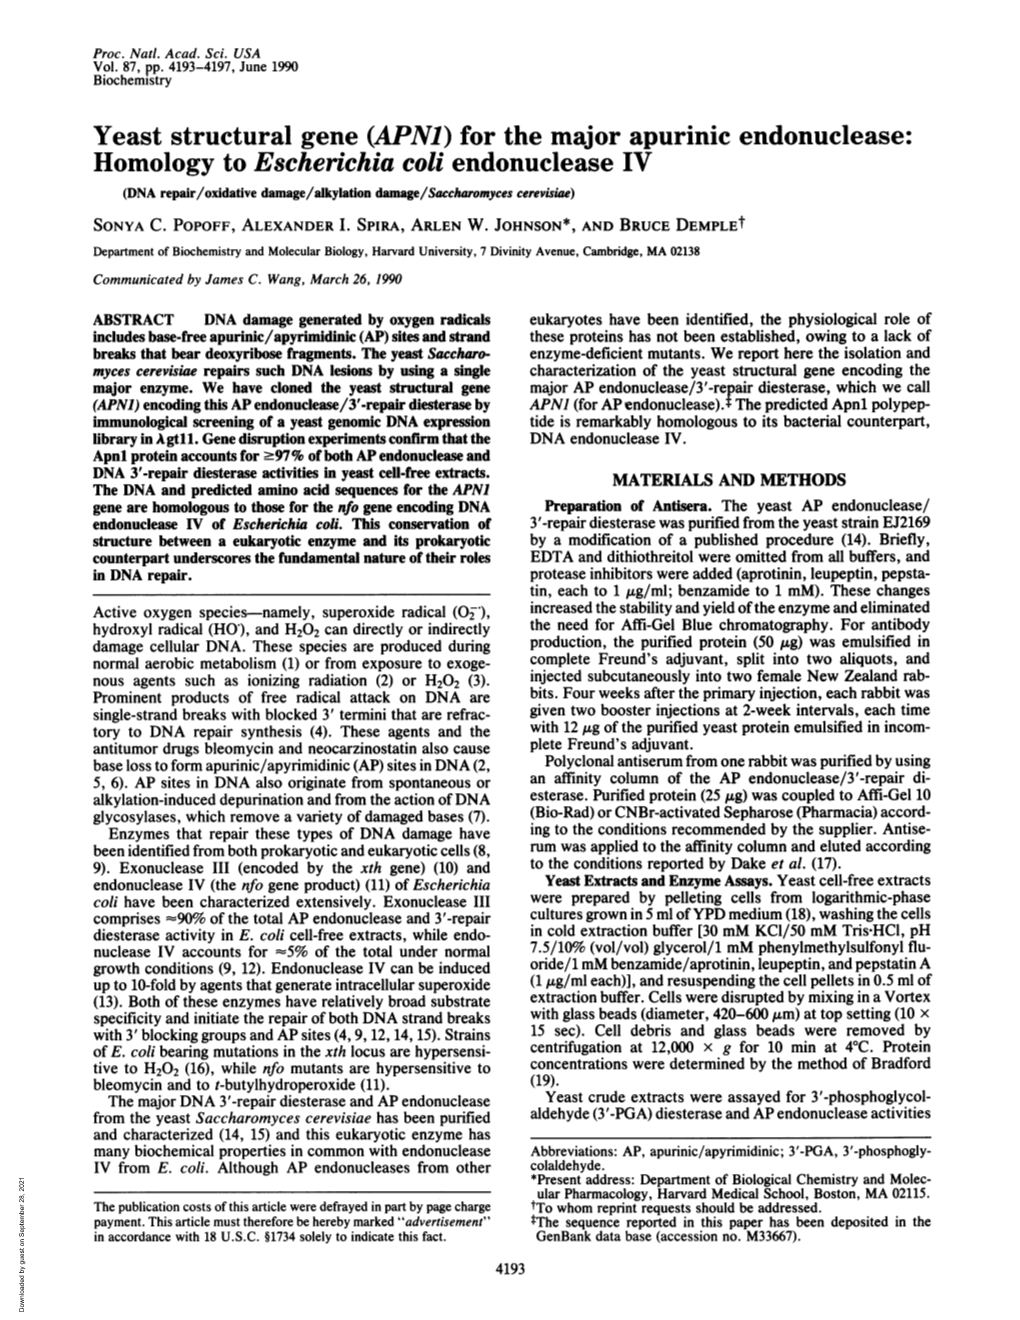 Homology to Escherichia Coli Endonuclease IV (DNA Repair/Oiddative Damage/Alkylation Damage/Saccharomyces Cerevisiae) SONYA C